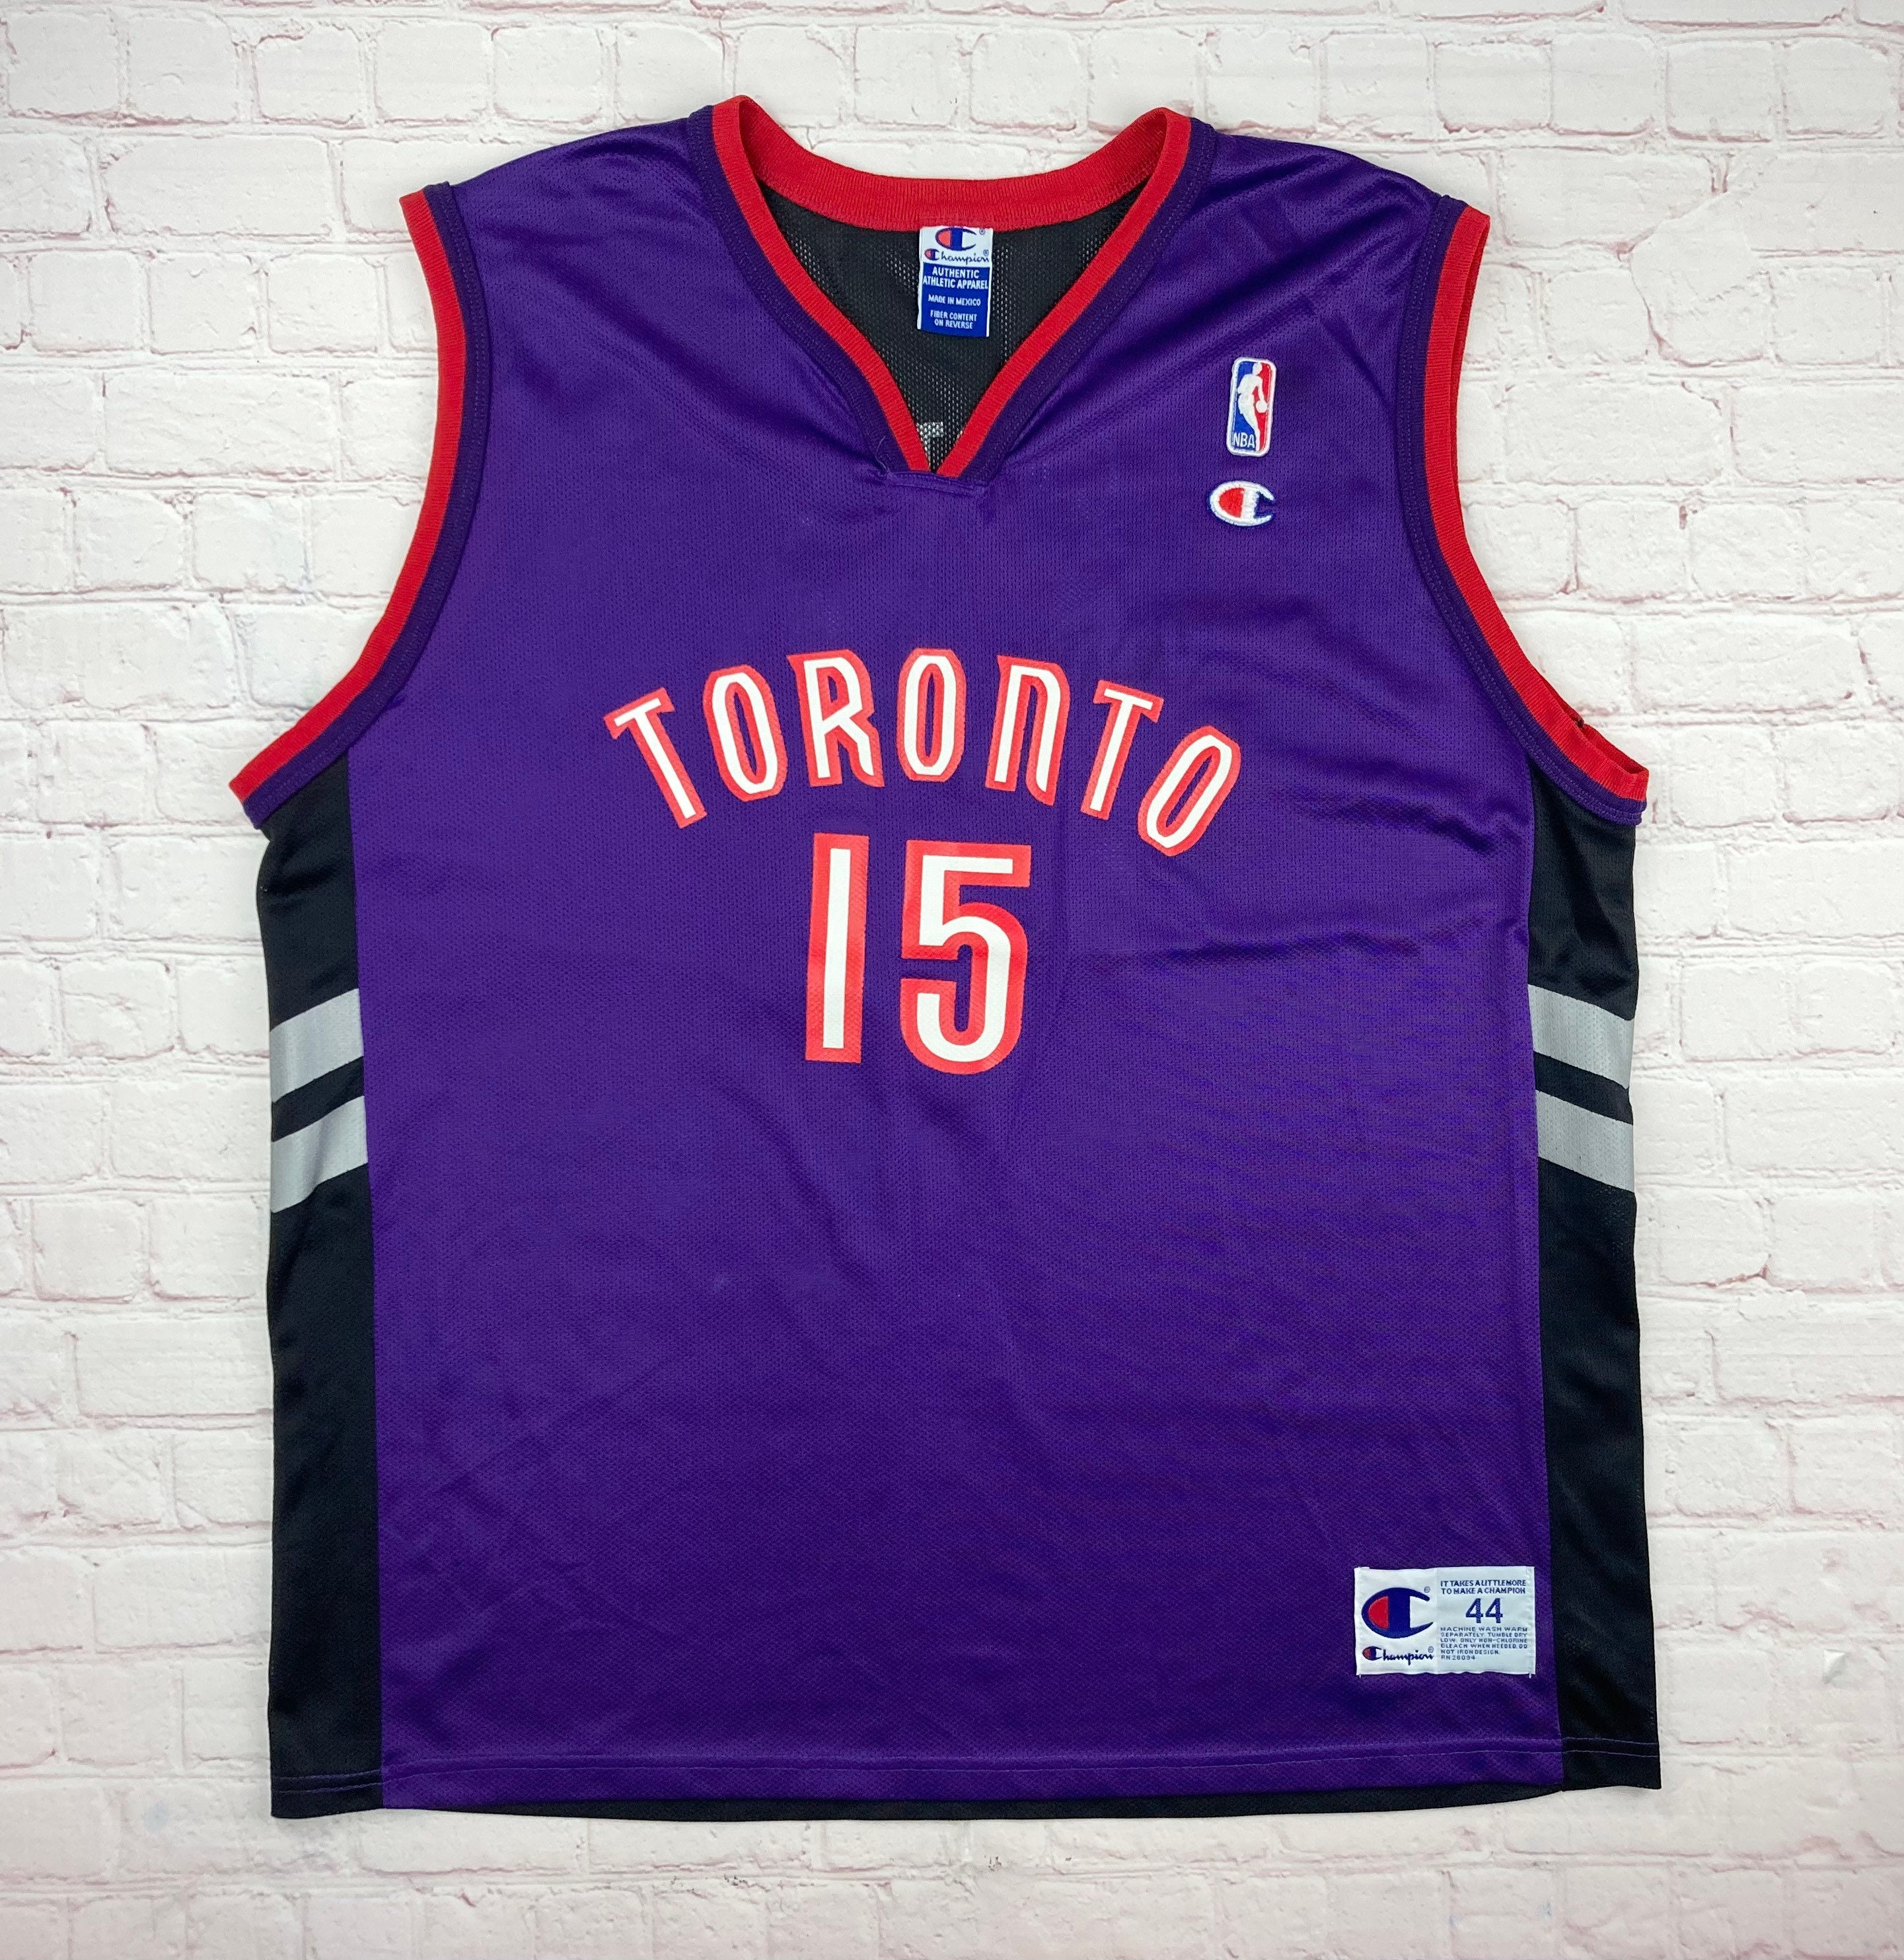 Size 44. 90s Vintage NBA Toronto Raptors Jersey 20 Damon -  New Zealand